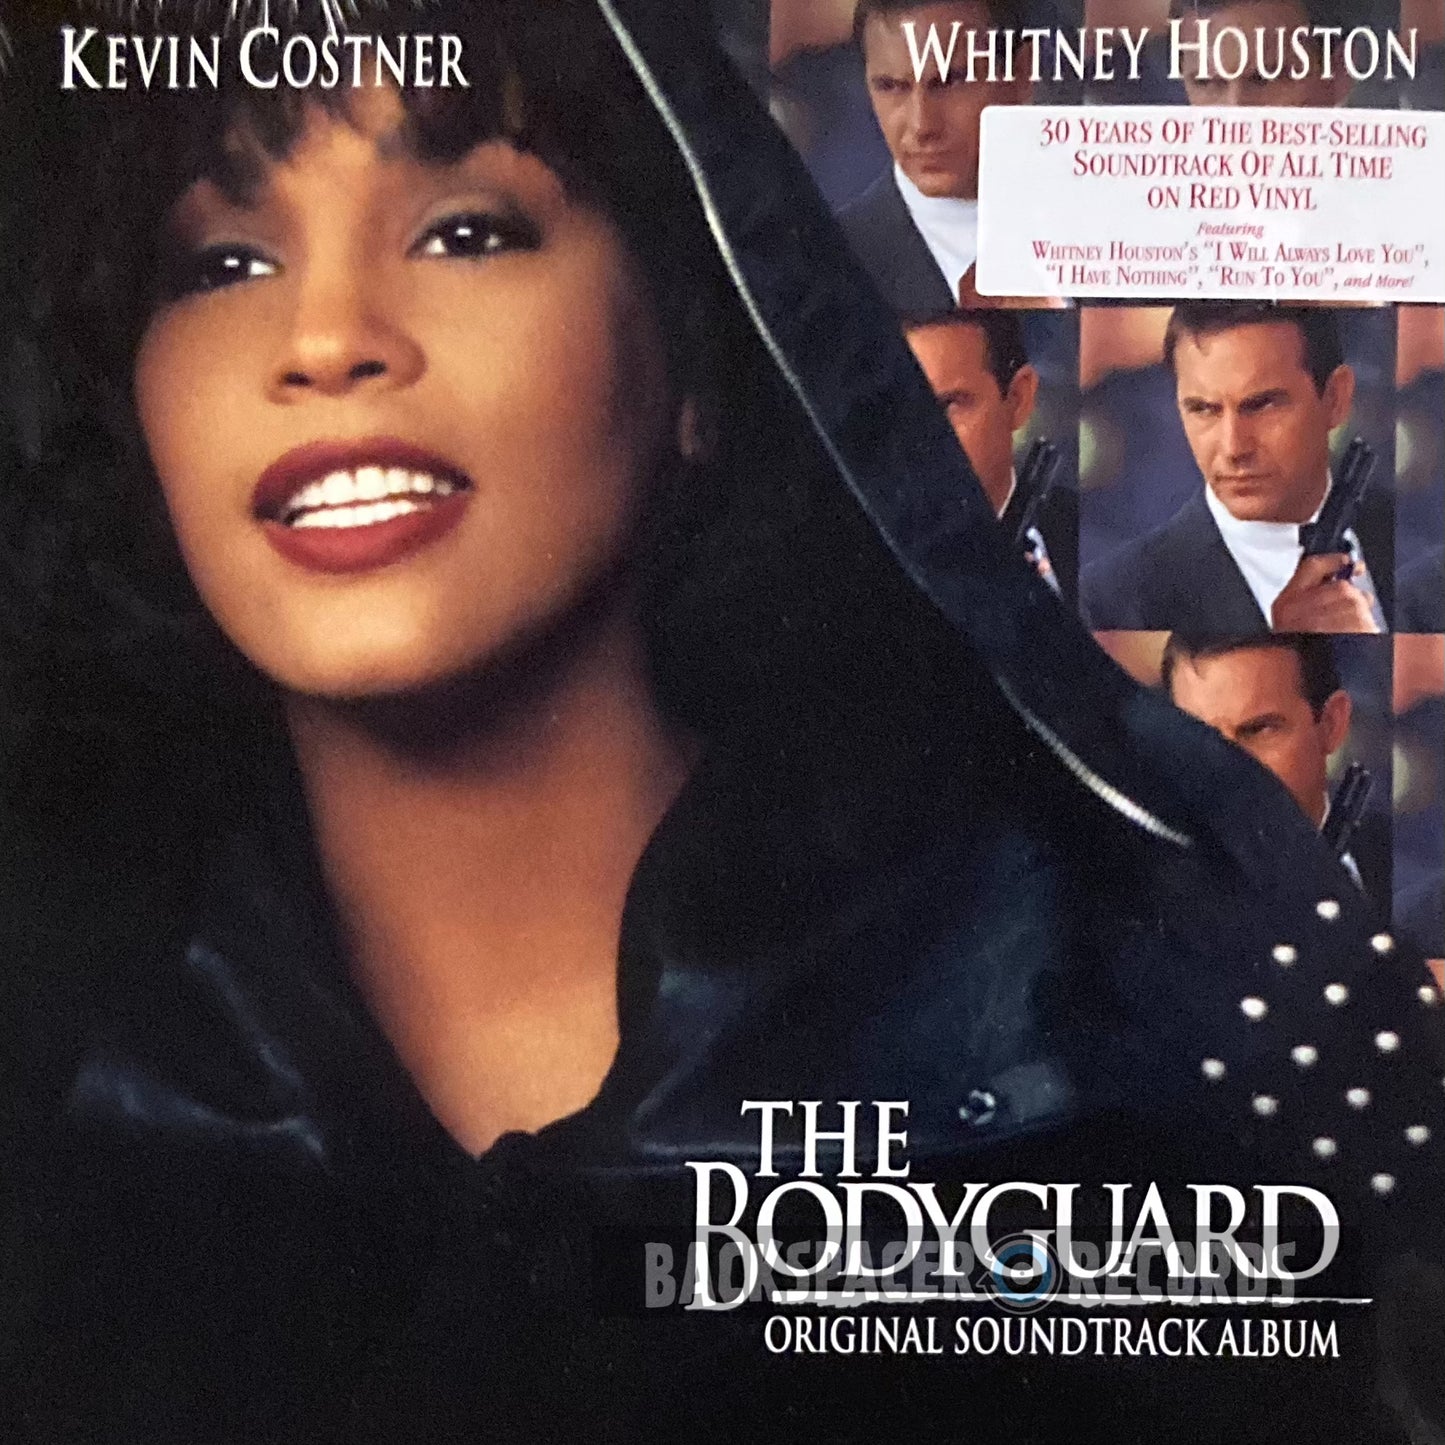 The Bodyguard: Original Soundtrack Album - Various Artists (Limited Edition) LP (Sealed)